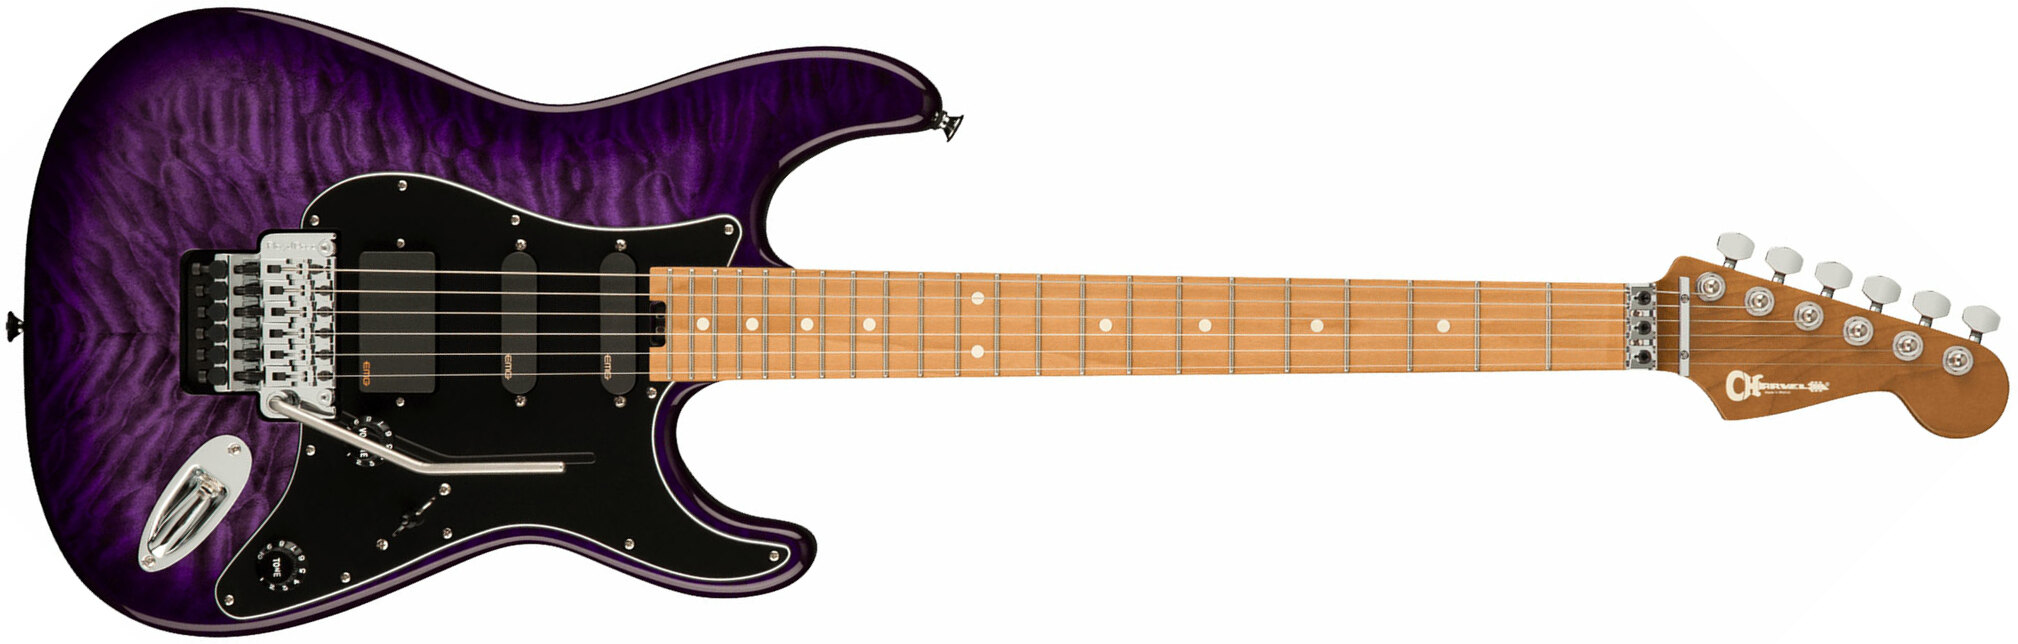 Charvel Marco Sfogli So Cal Style 1 Pro Mod Signature Hss Emg Fr Mn - Transparent Purple Burst - Signature electric guitar - Main picture